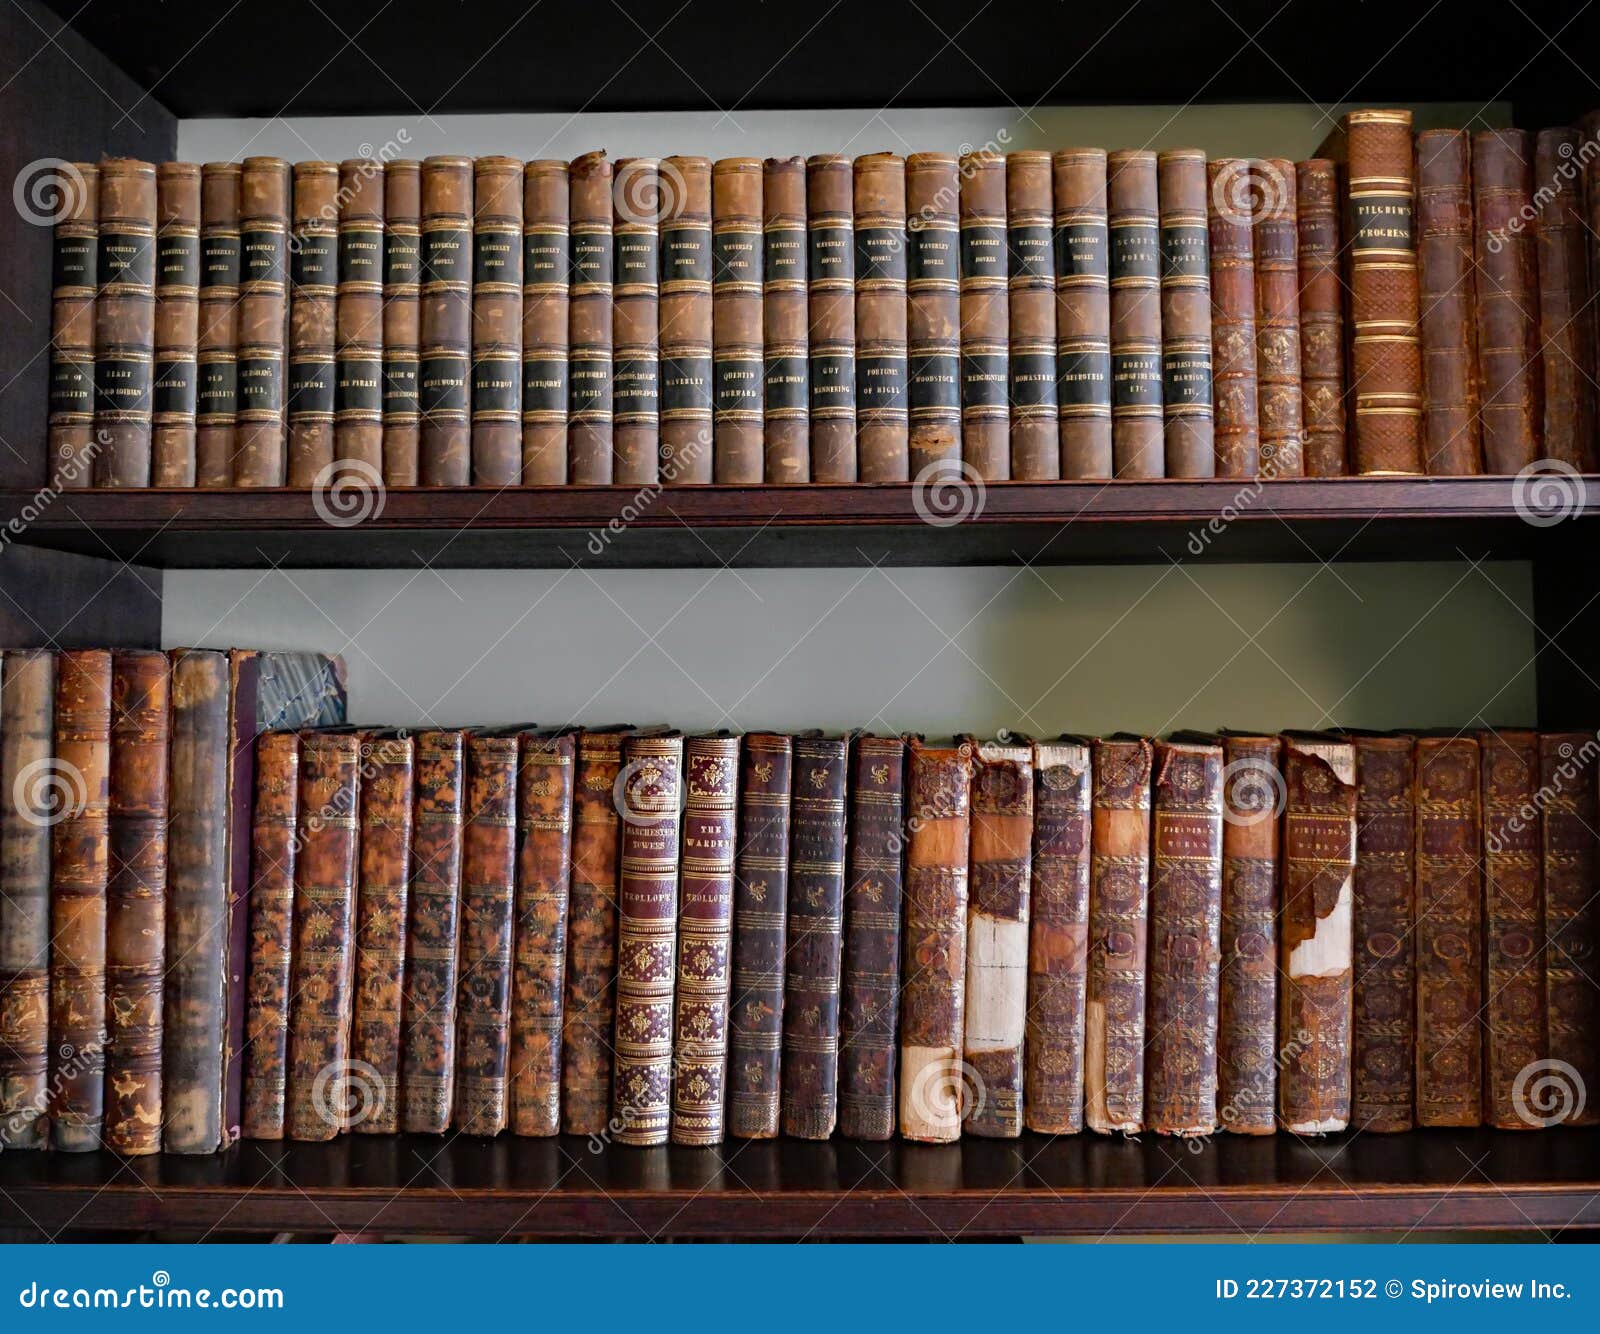 shelf of old 19th century english literature books